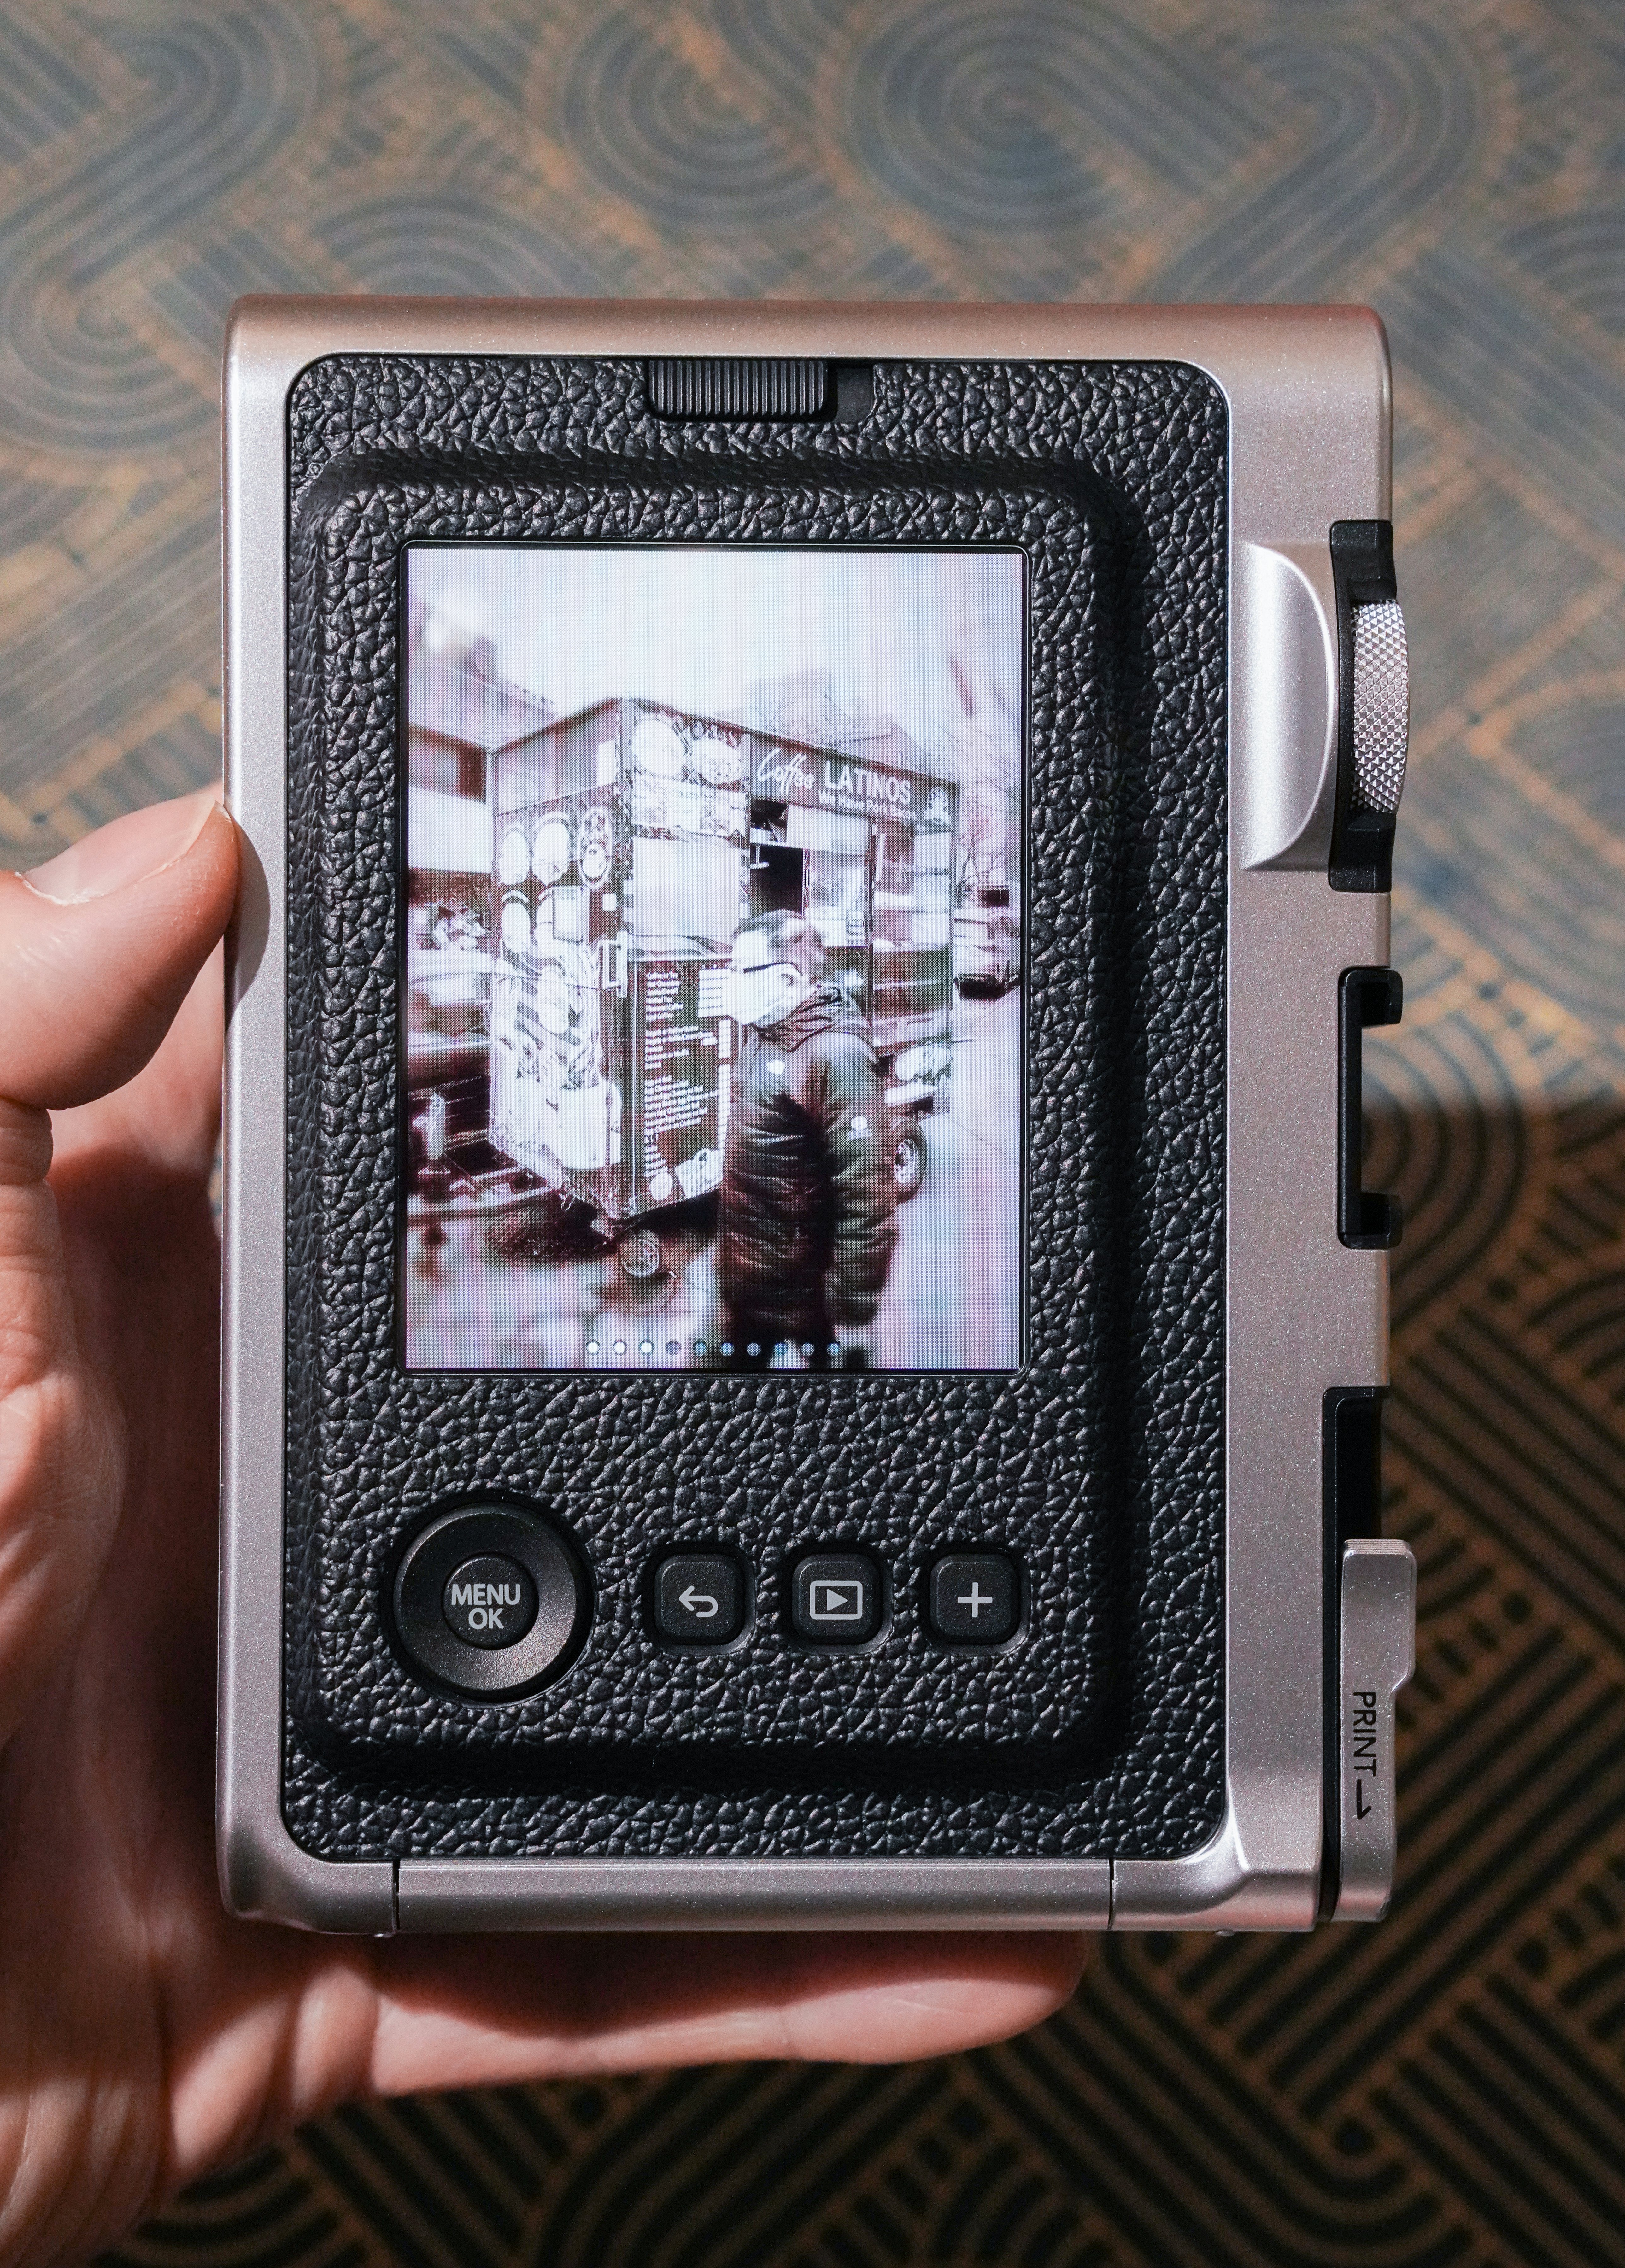 Fujifilm Instax Mini Evo Premium Ed. review: Right blend of nostalgia, tech